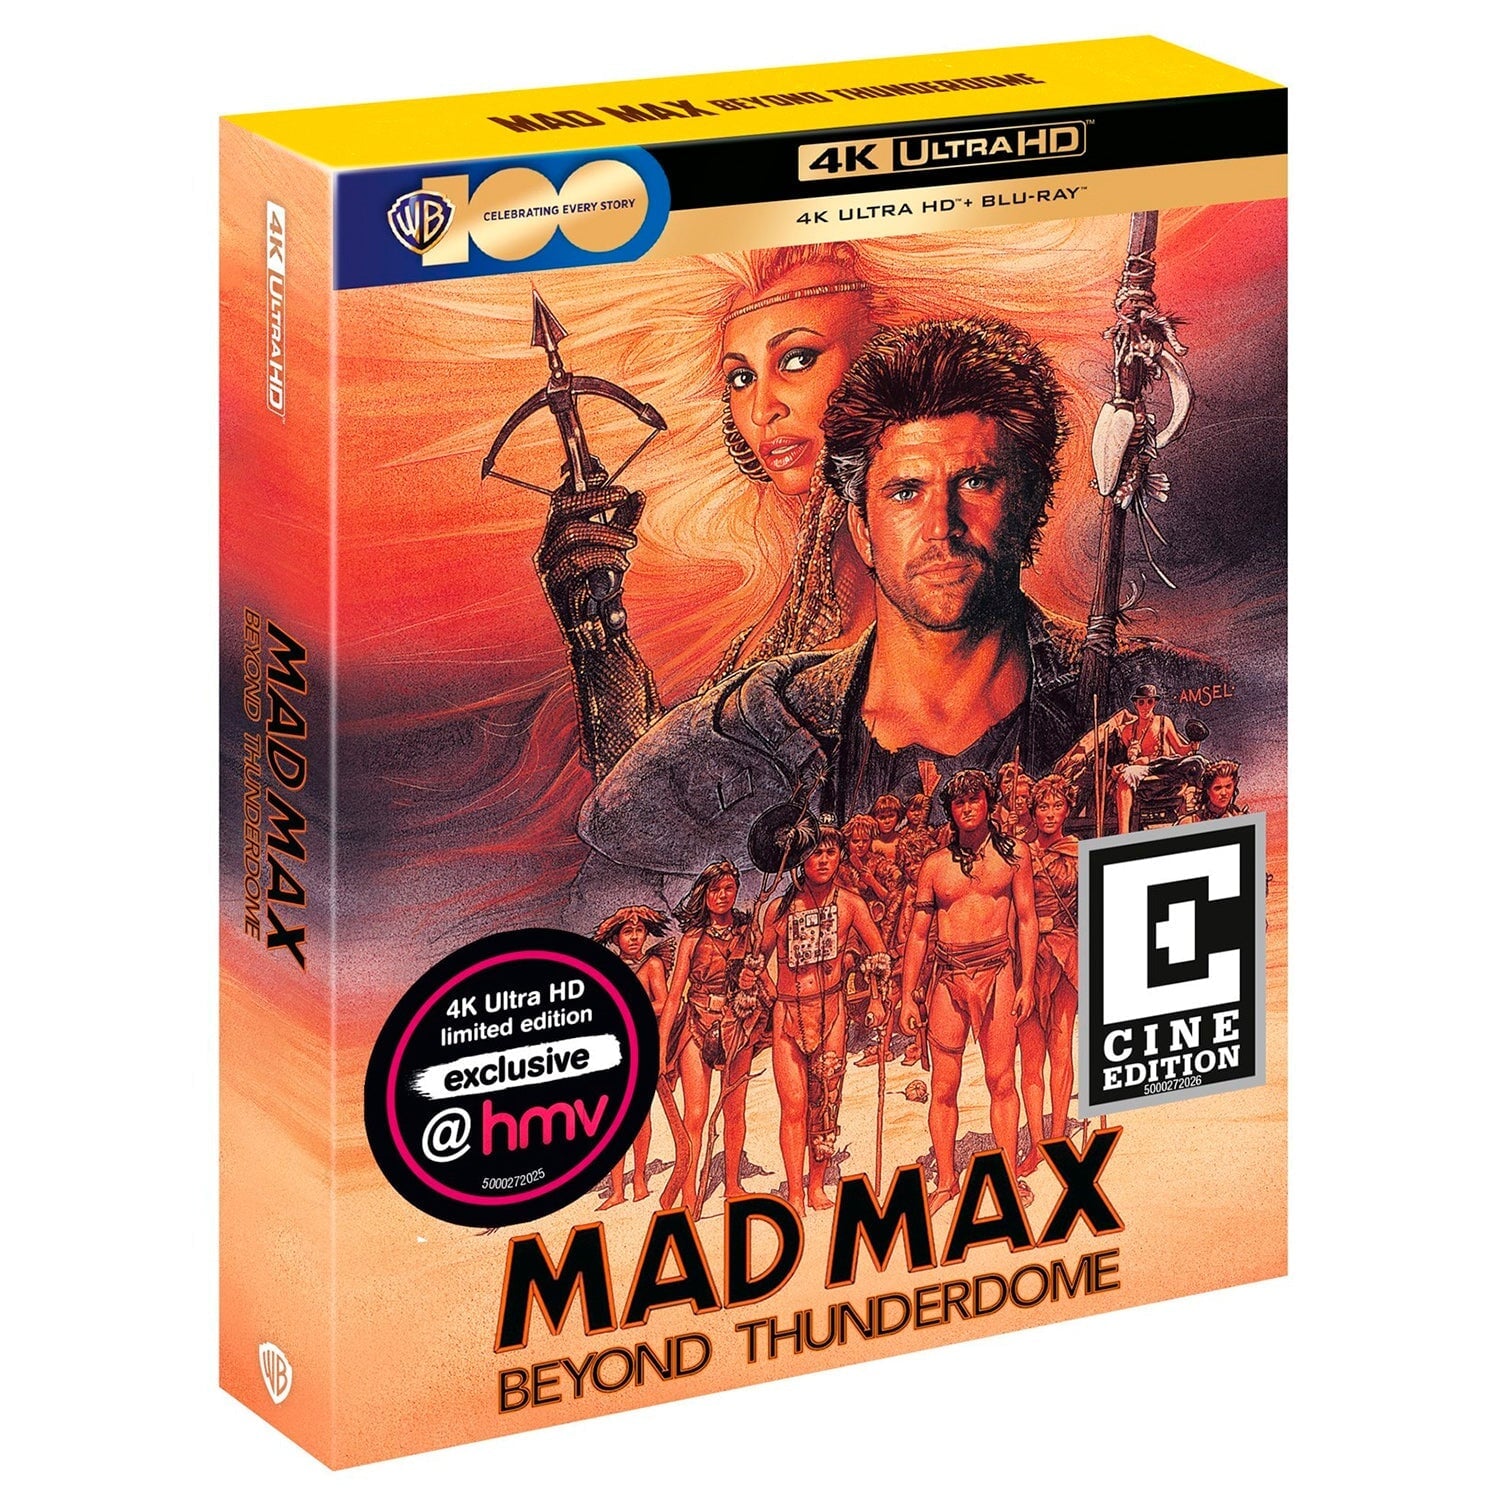 Mad Max 3: Beyond Thunderdome, Full Movie